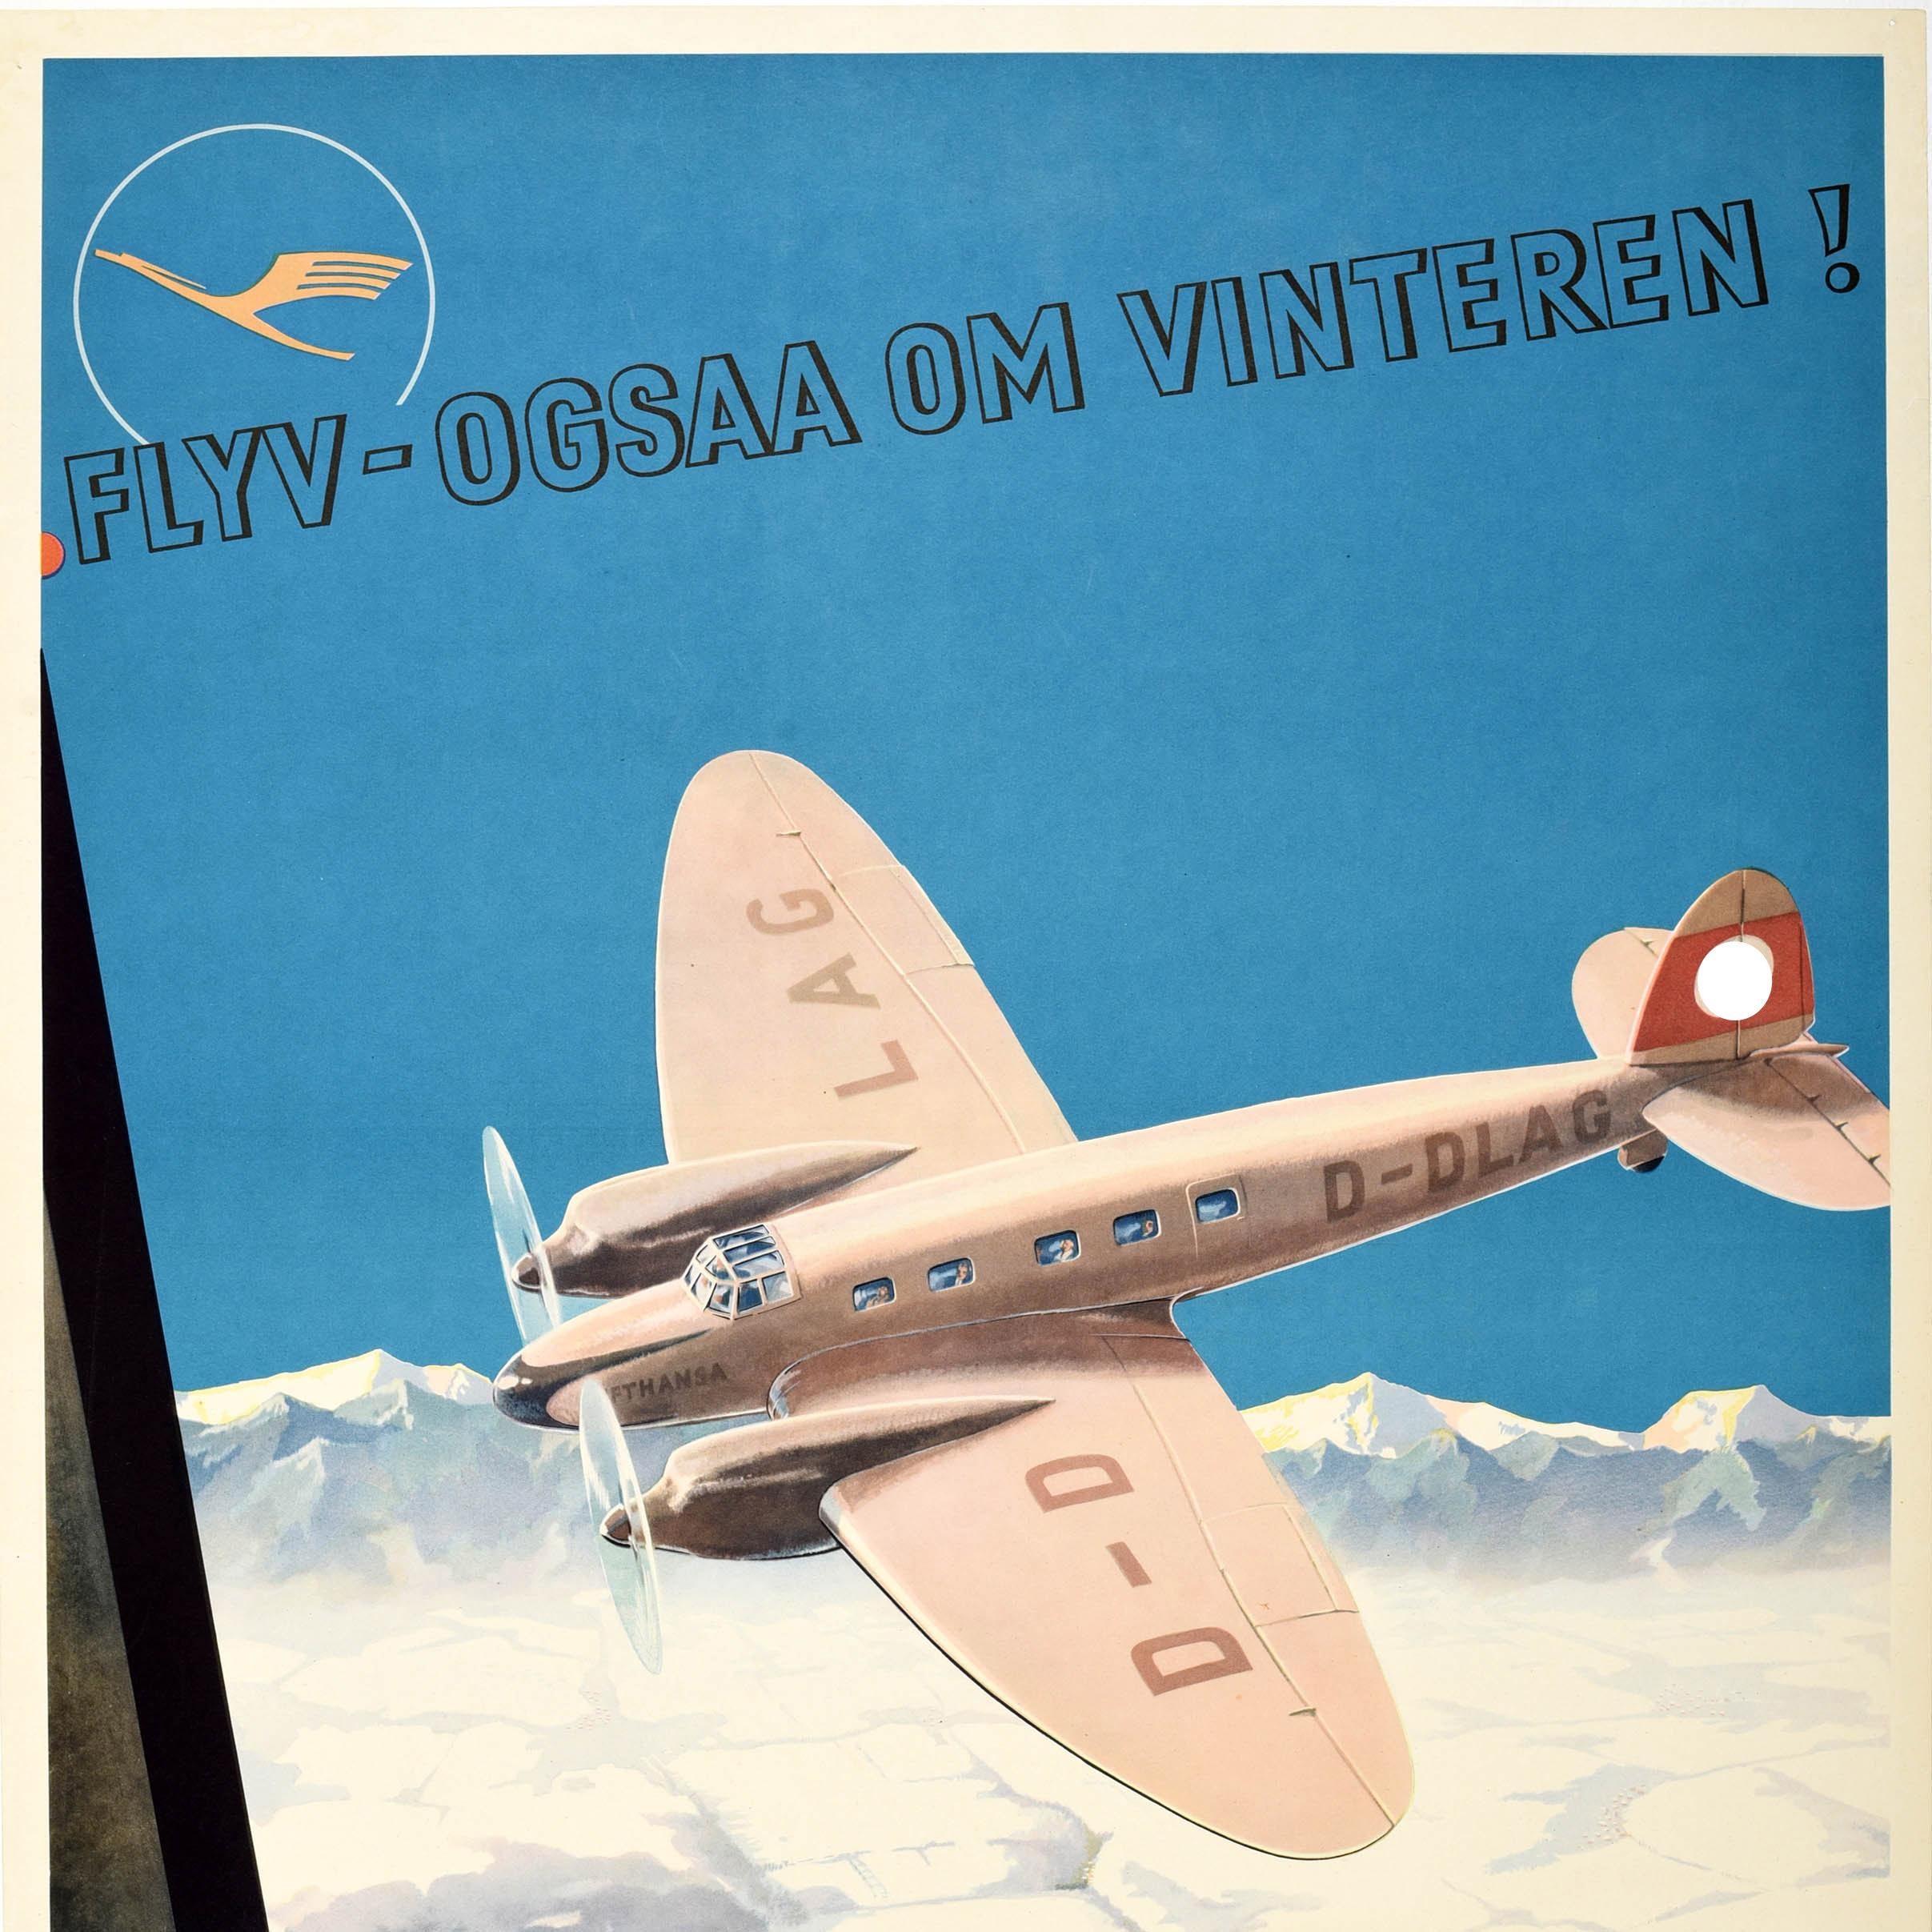 Allemand Affiche rétro originale Deutsche Lufthansa, Flyv-Ogsaa, Om Vinteren, Avions d'hiver en vente